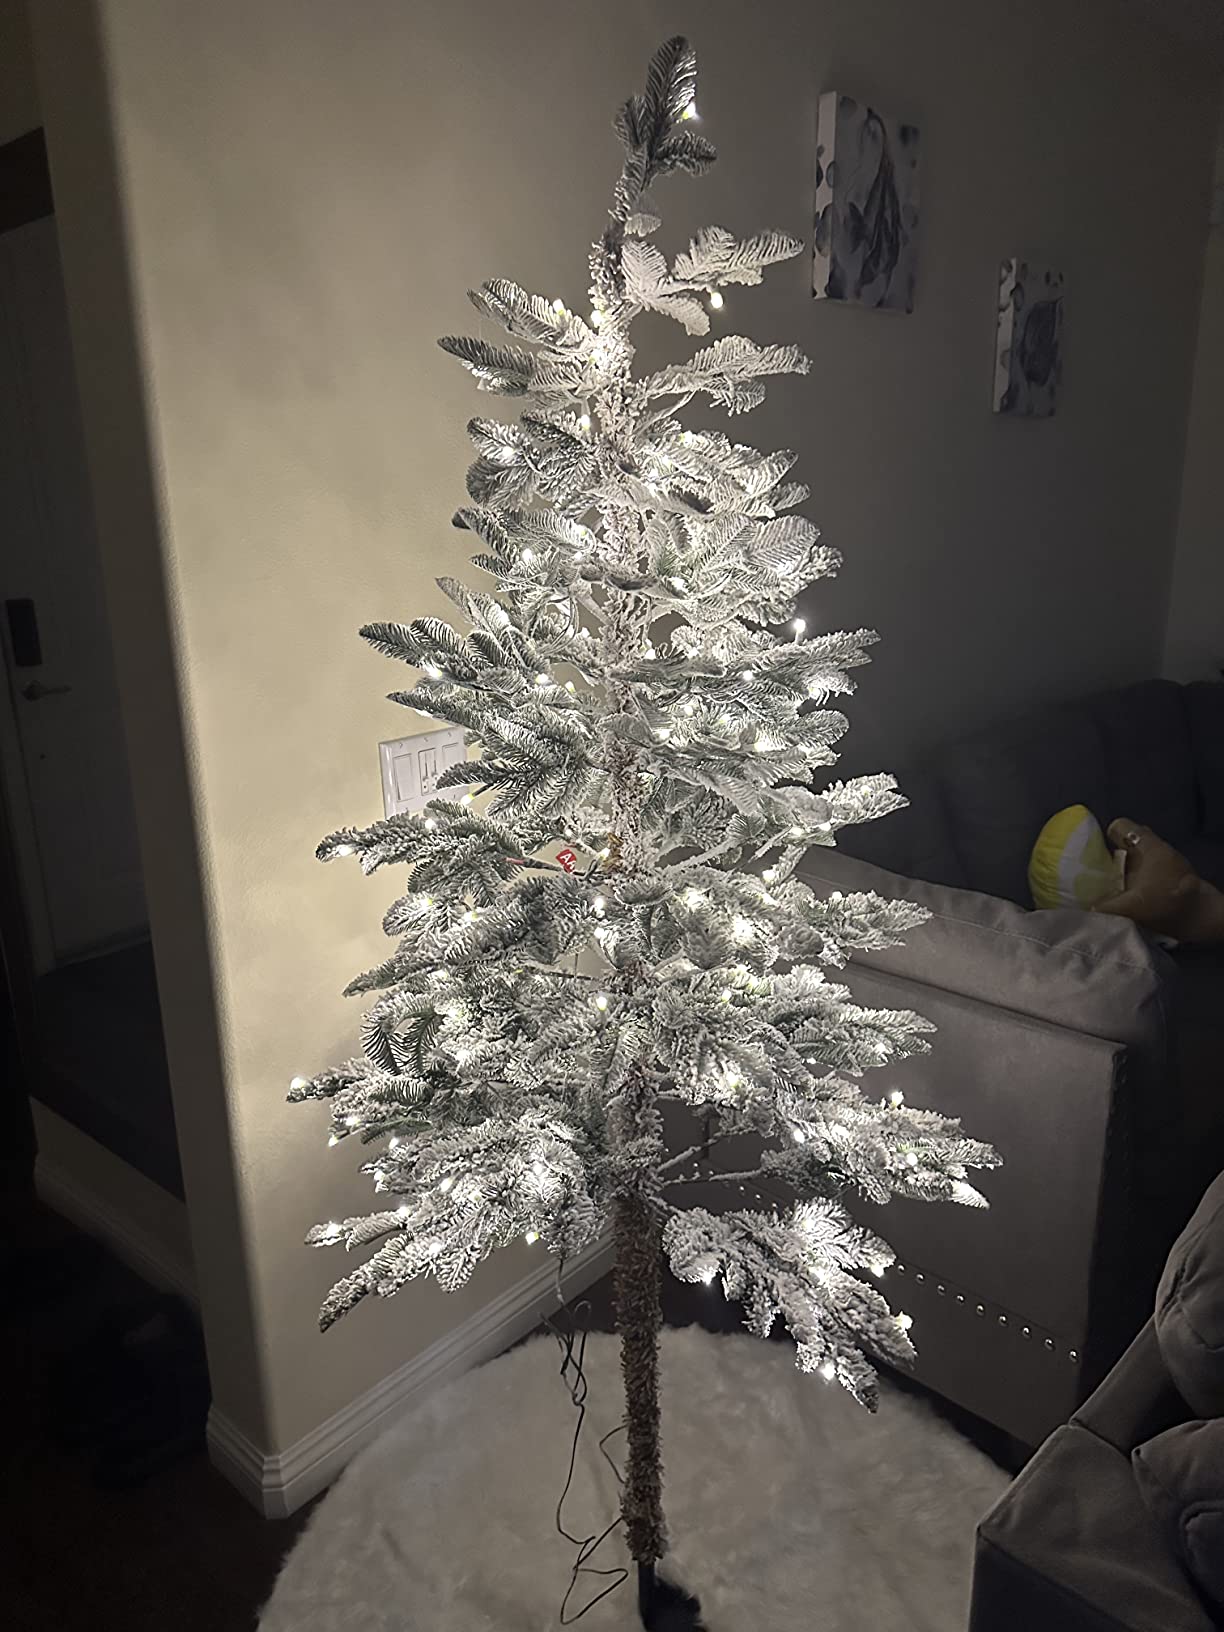 Amazing Christmas tree